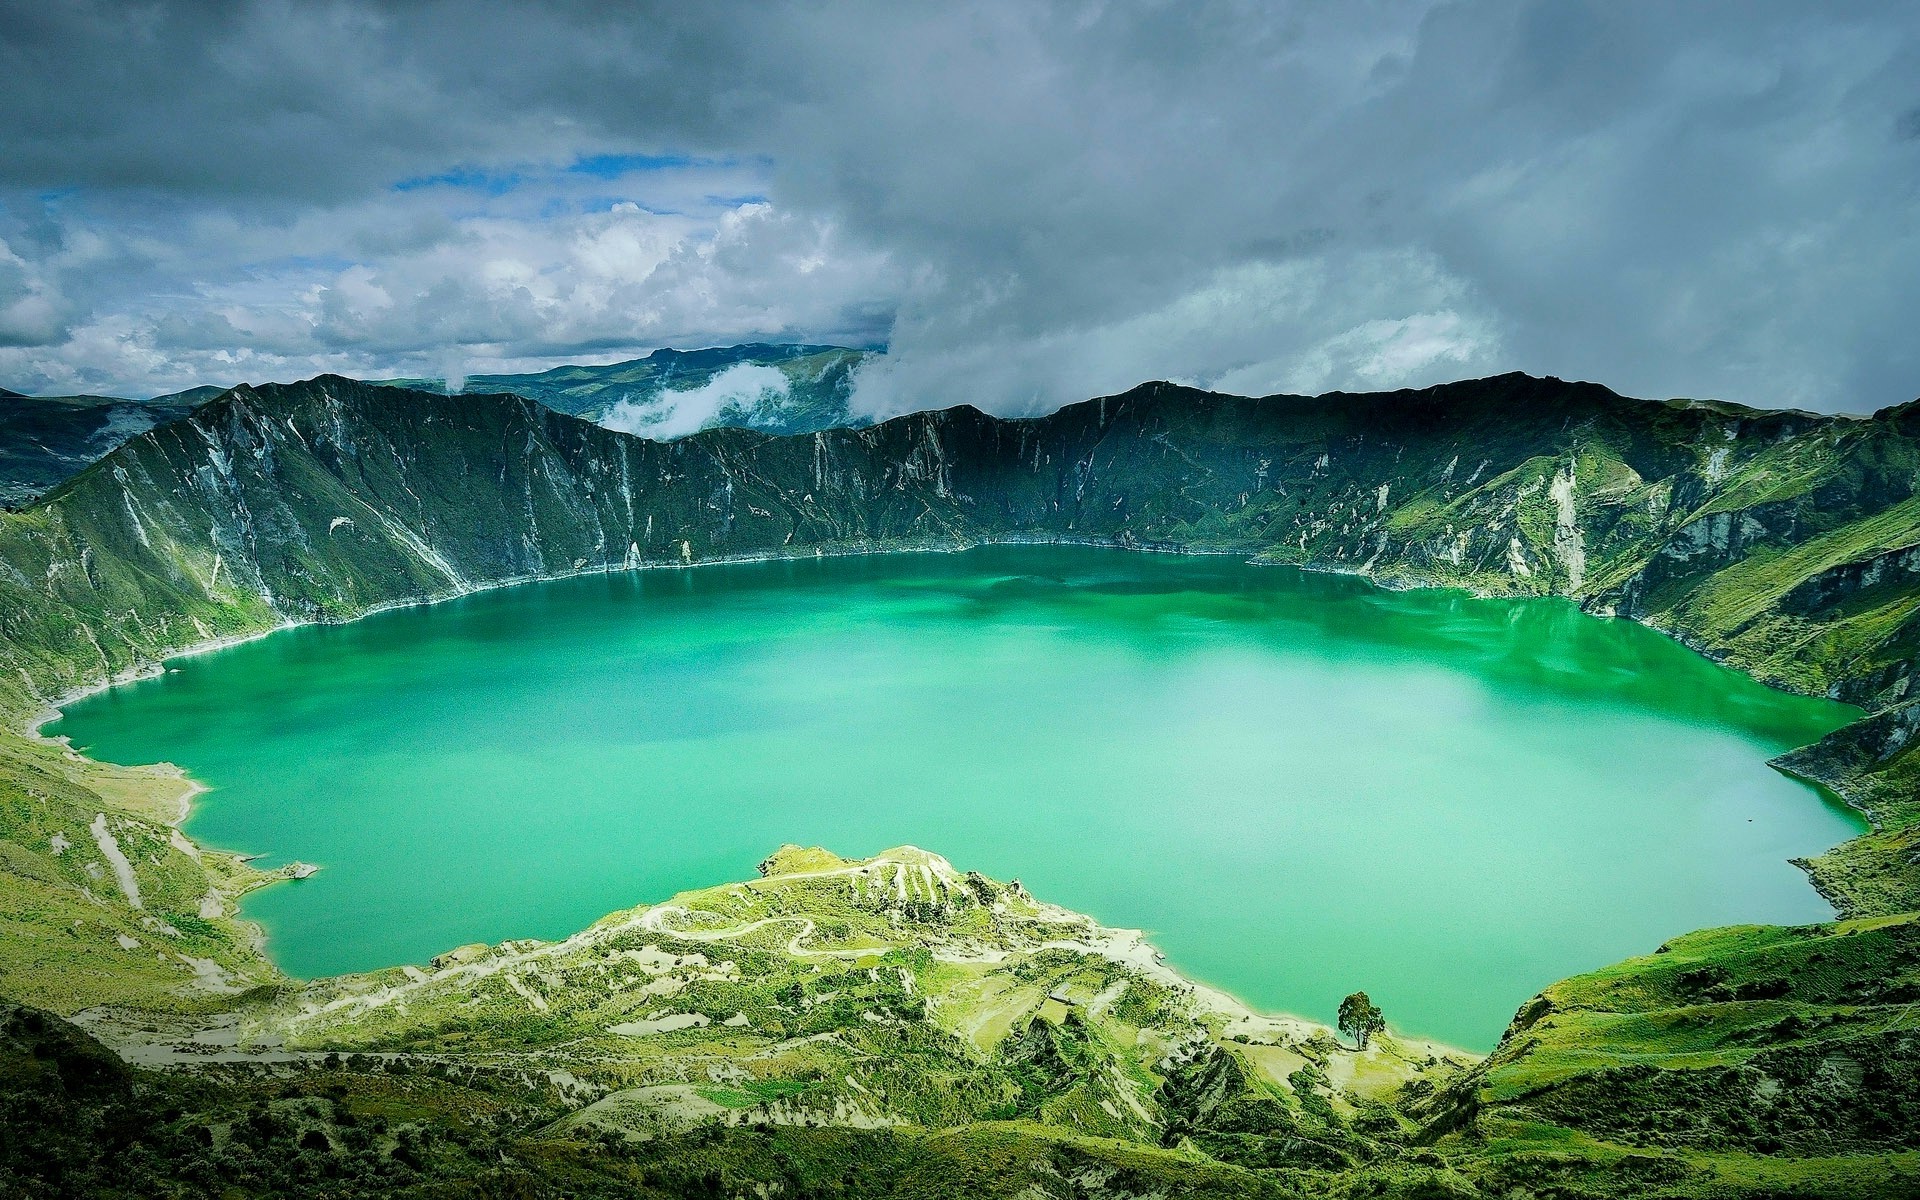 Ecuador, Andes, Caldera, Volcano, Clouds, Grass, Mountain, Water, Green, Nature, Landscape Wallpaper